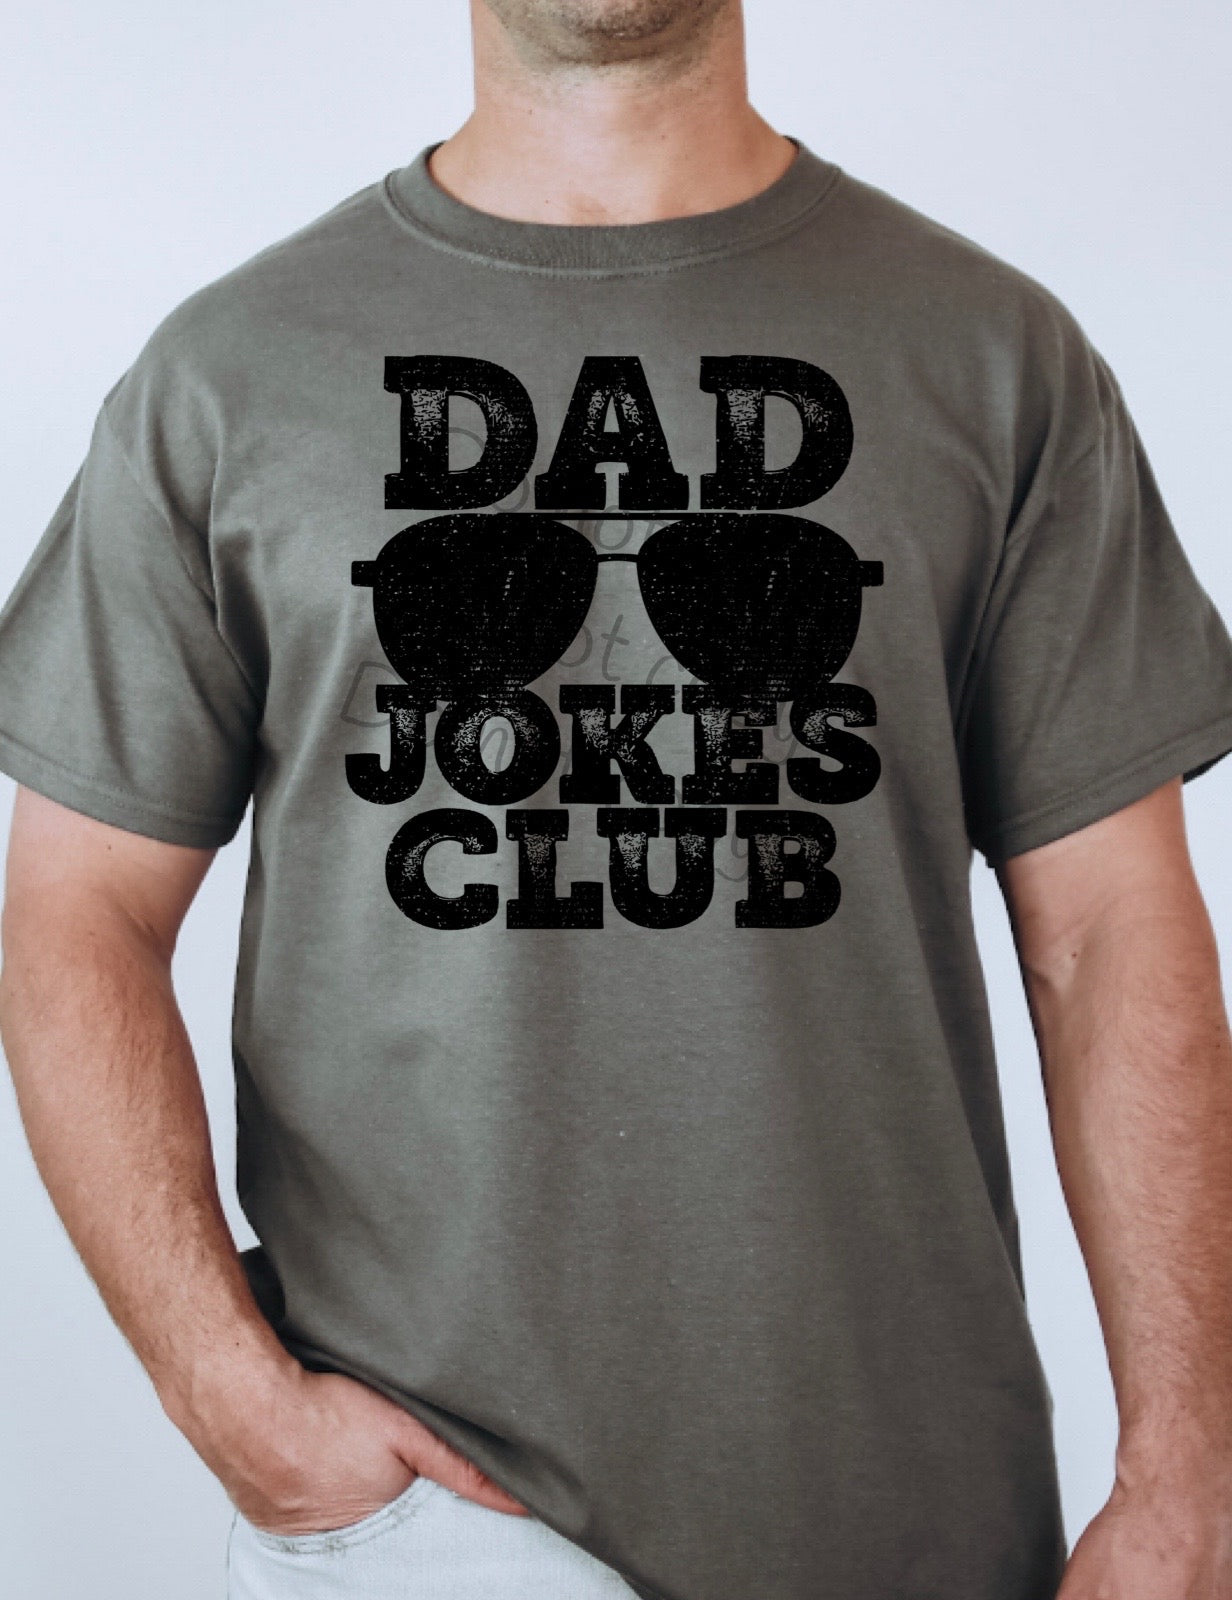 Dad jokes club-DTF